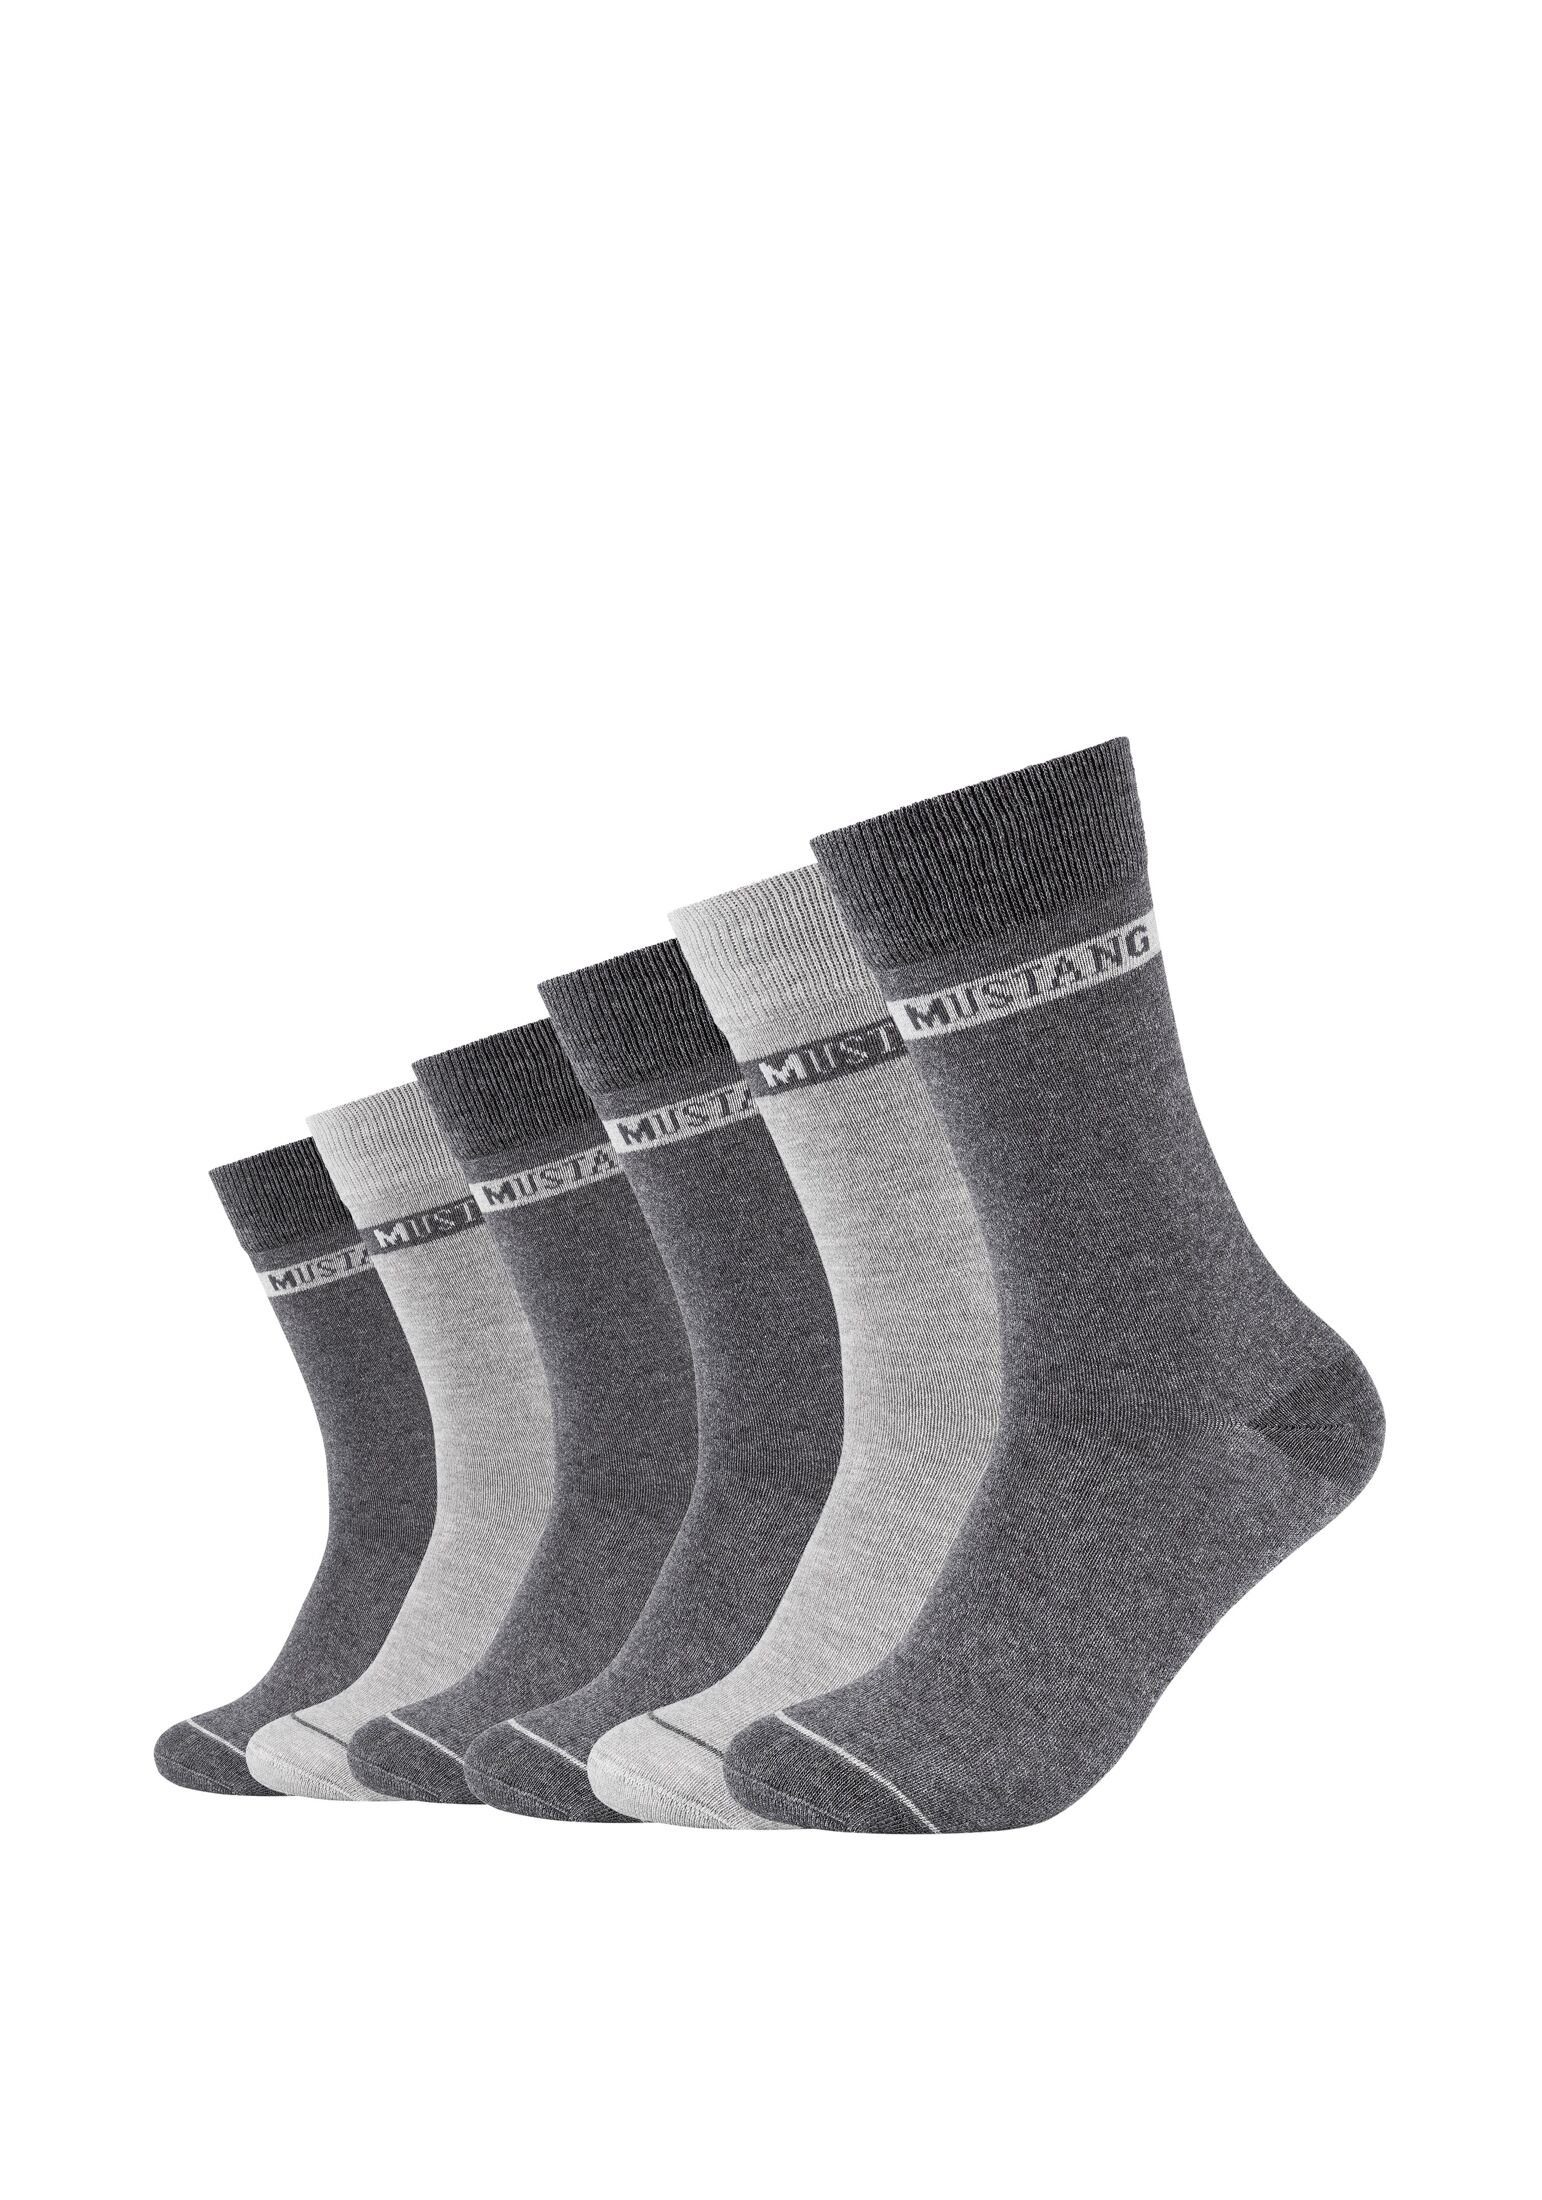 Socken 6er mix dark MUSTANG grey Socken Pack